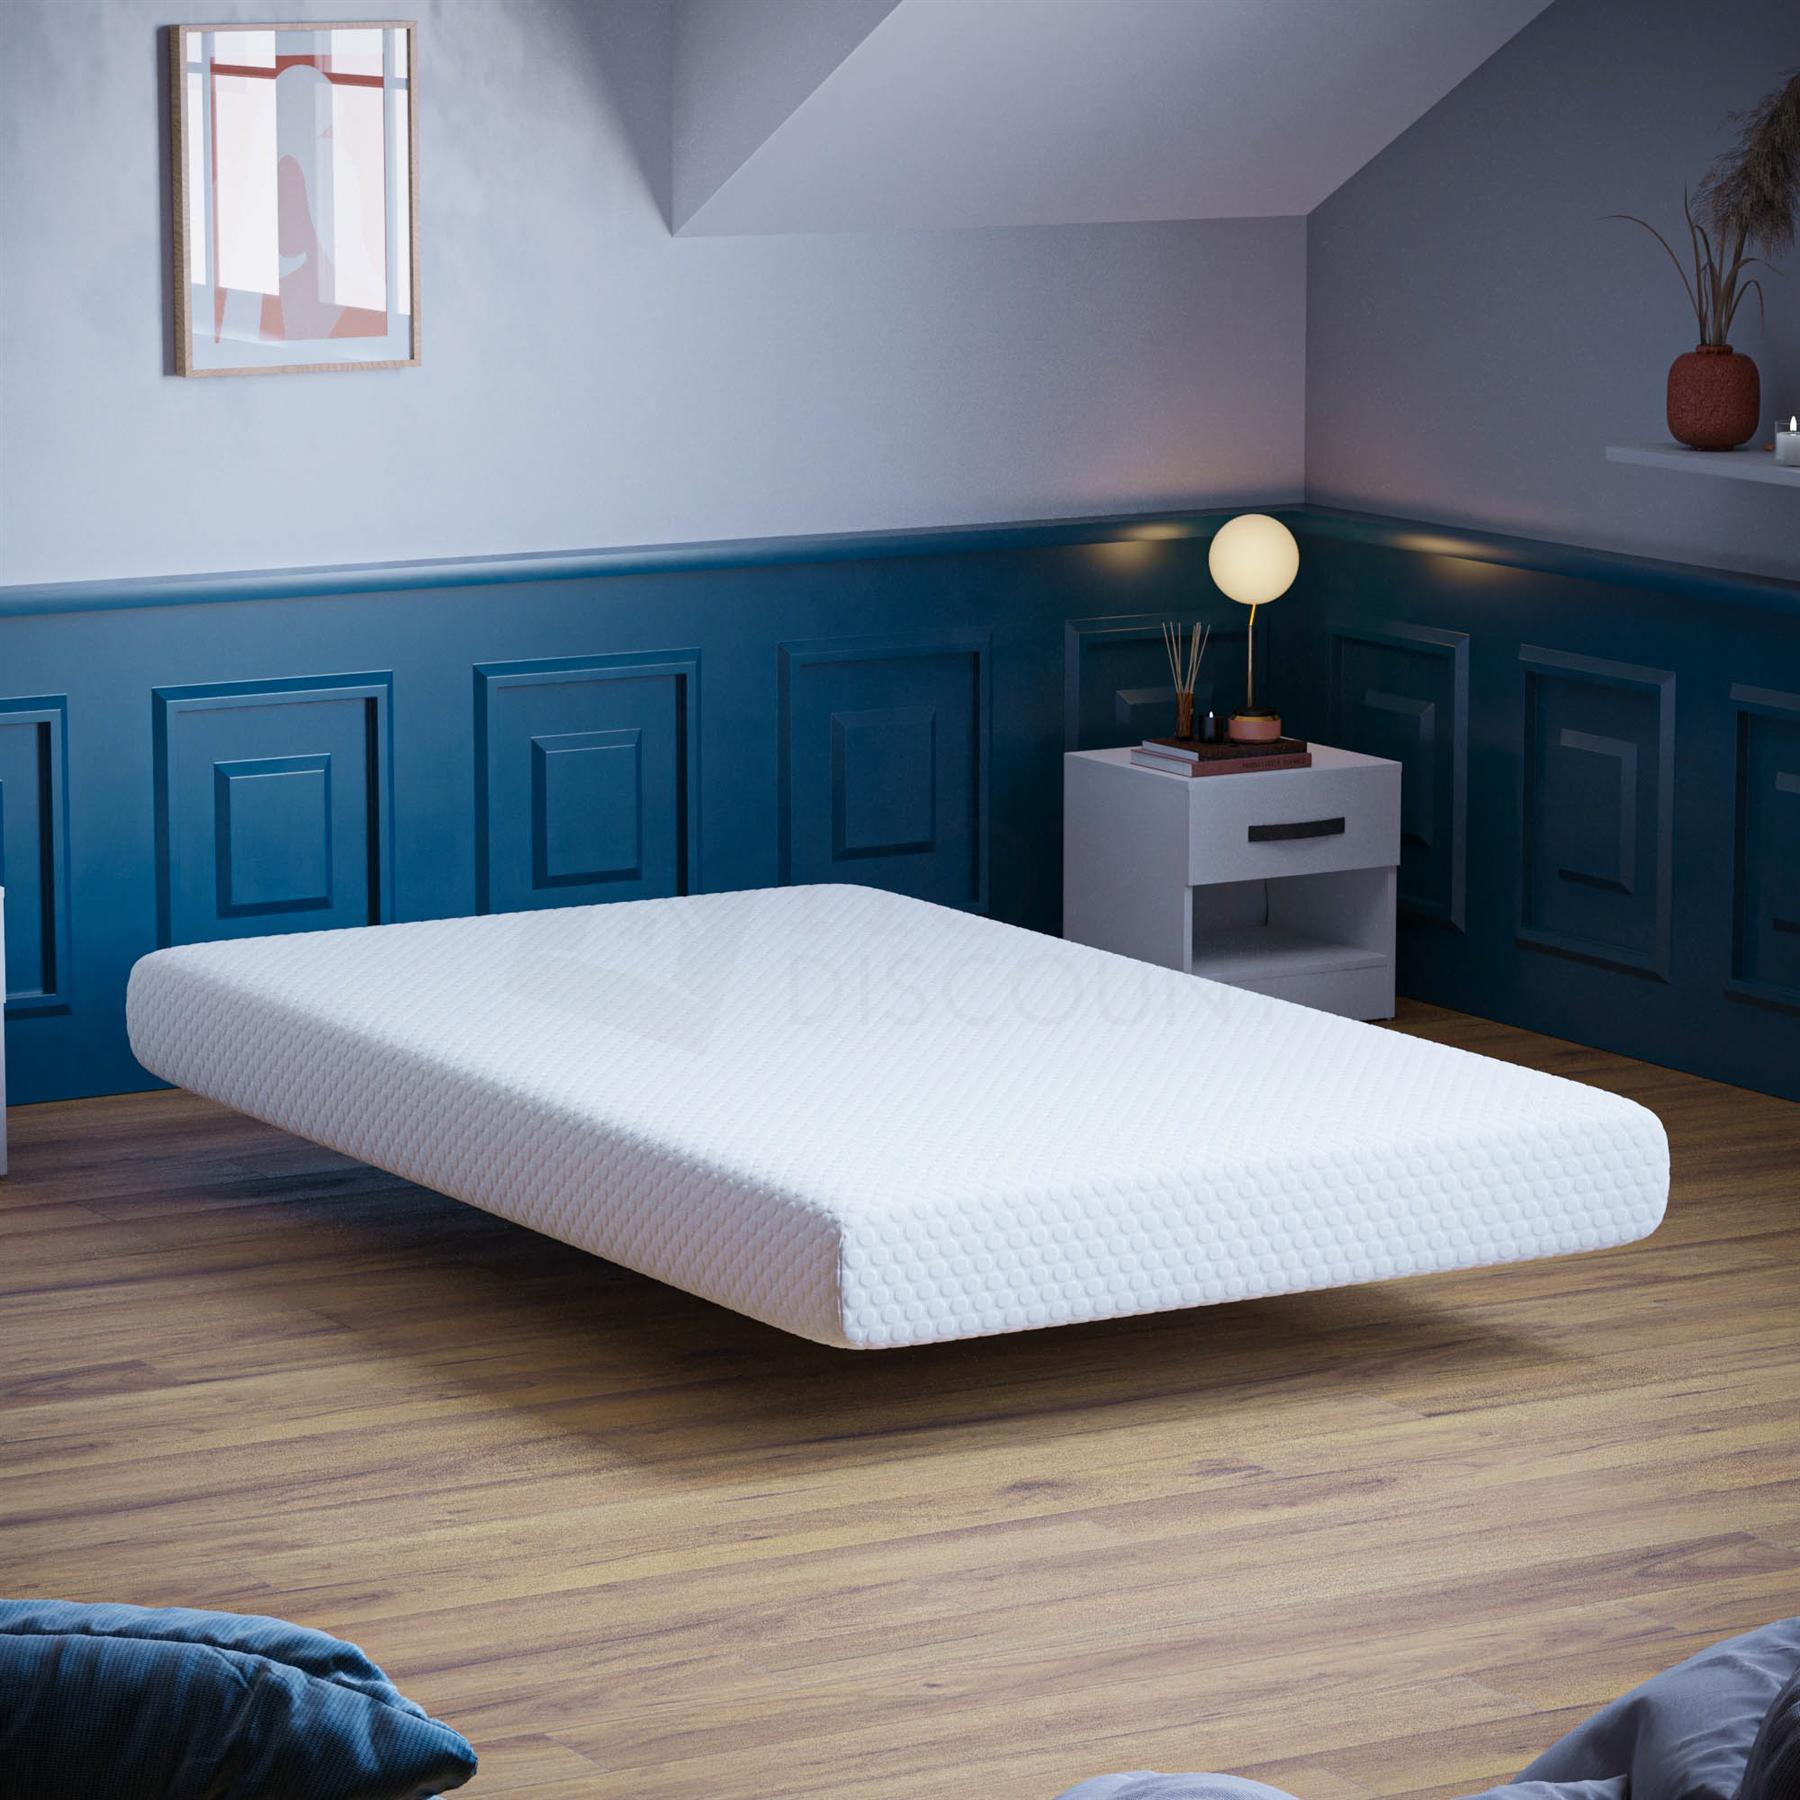 "Vida Designs Comfort Memory Foam Mattress 8"" High-Quality Durable Bedroom Mattress" - image 1